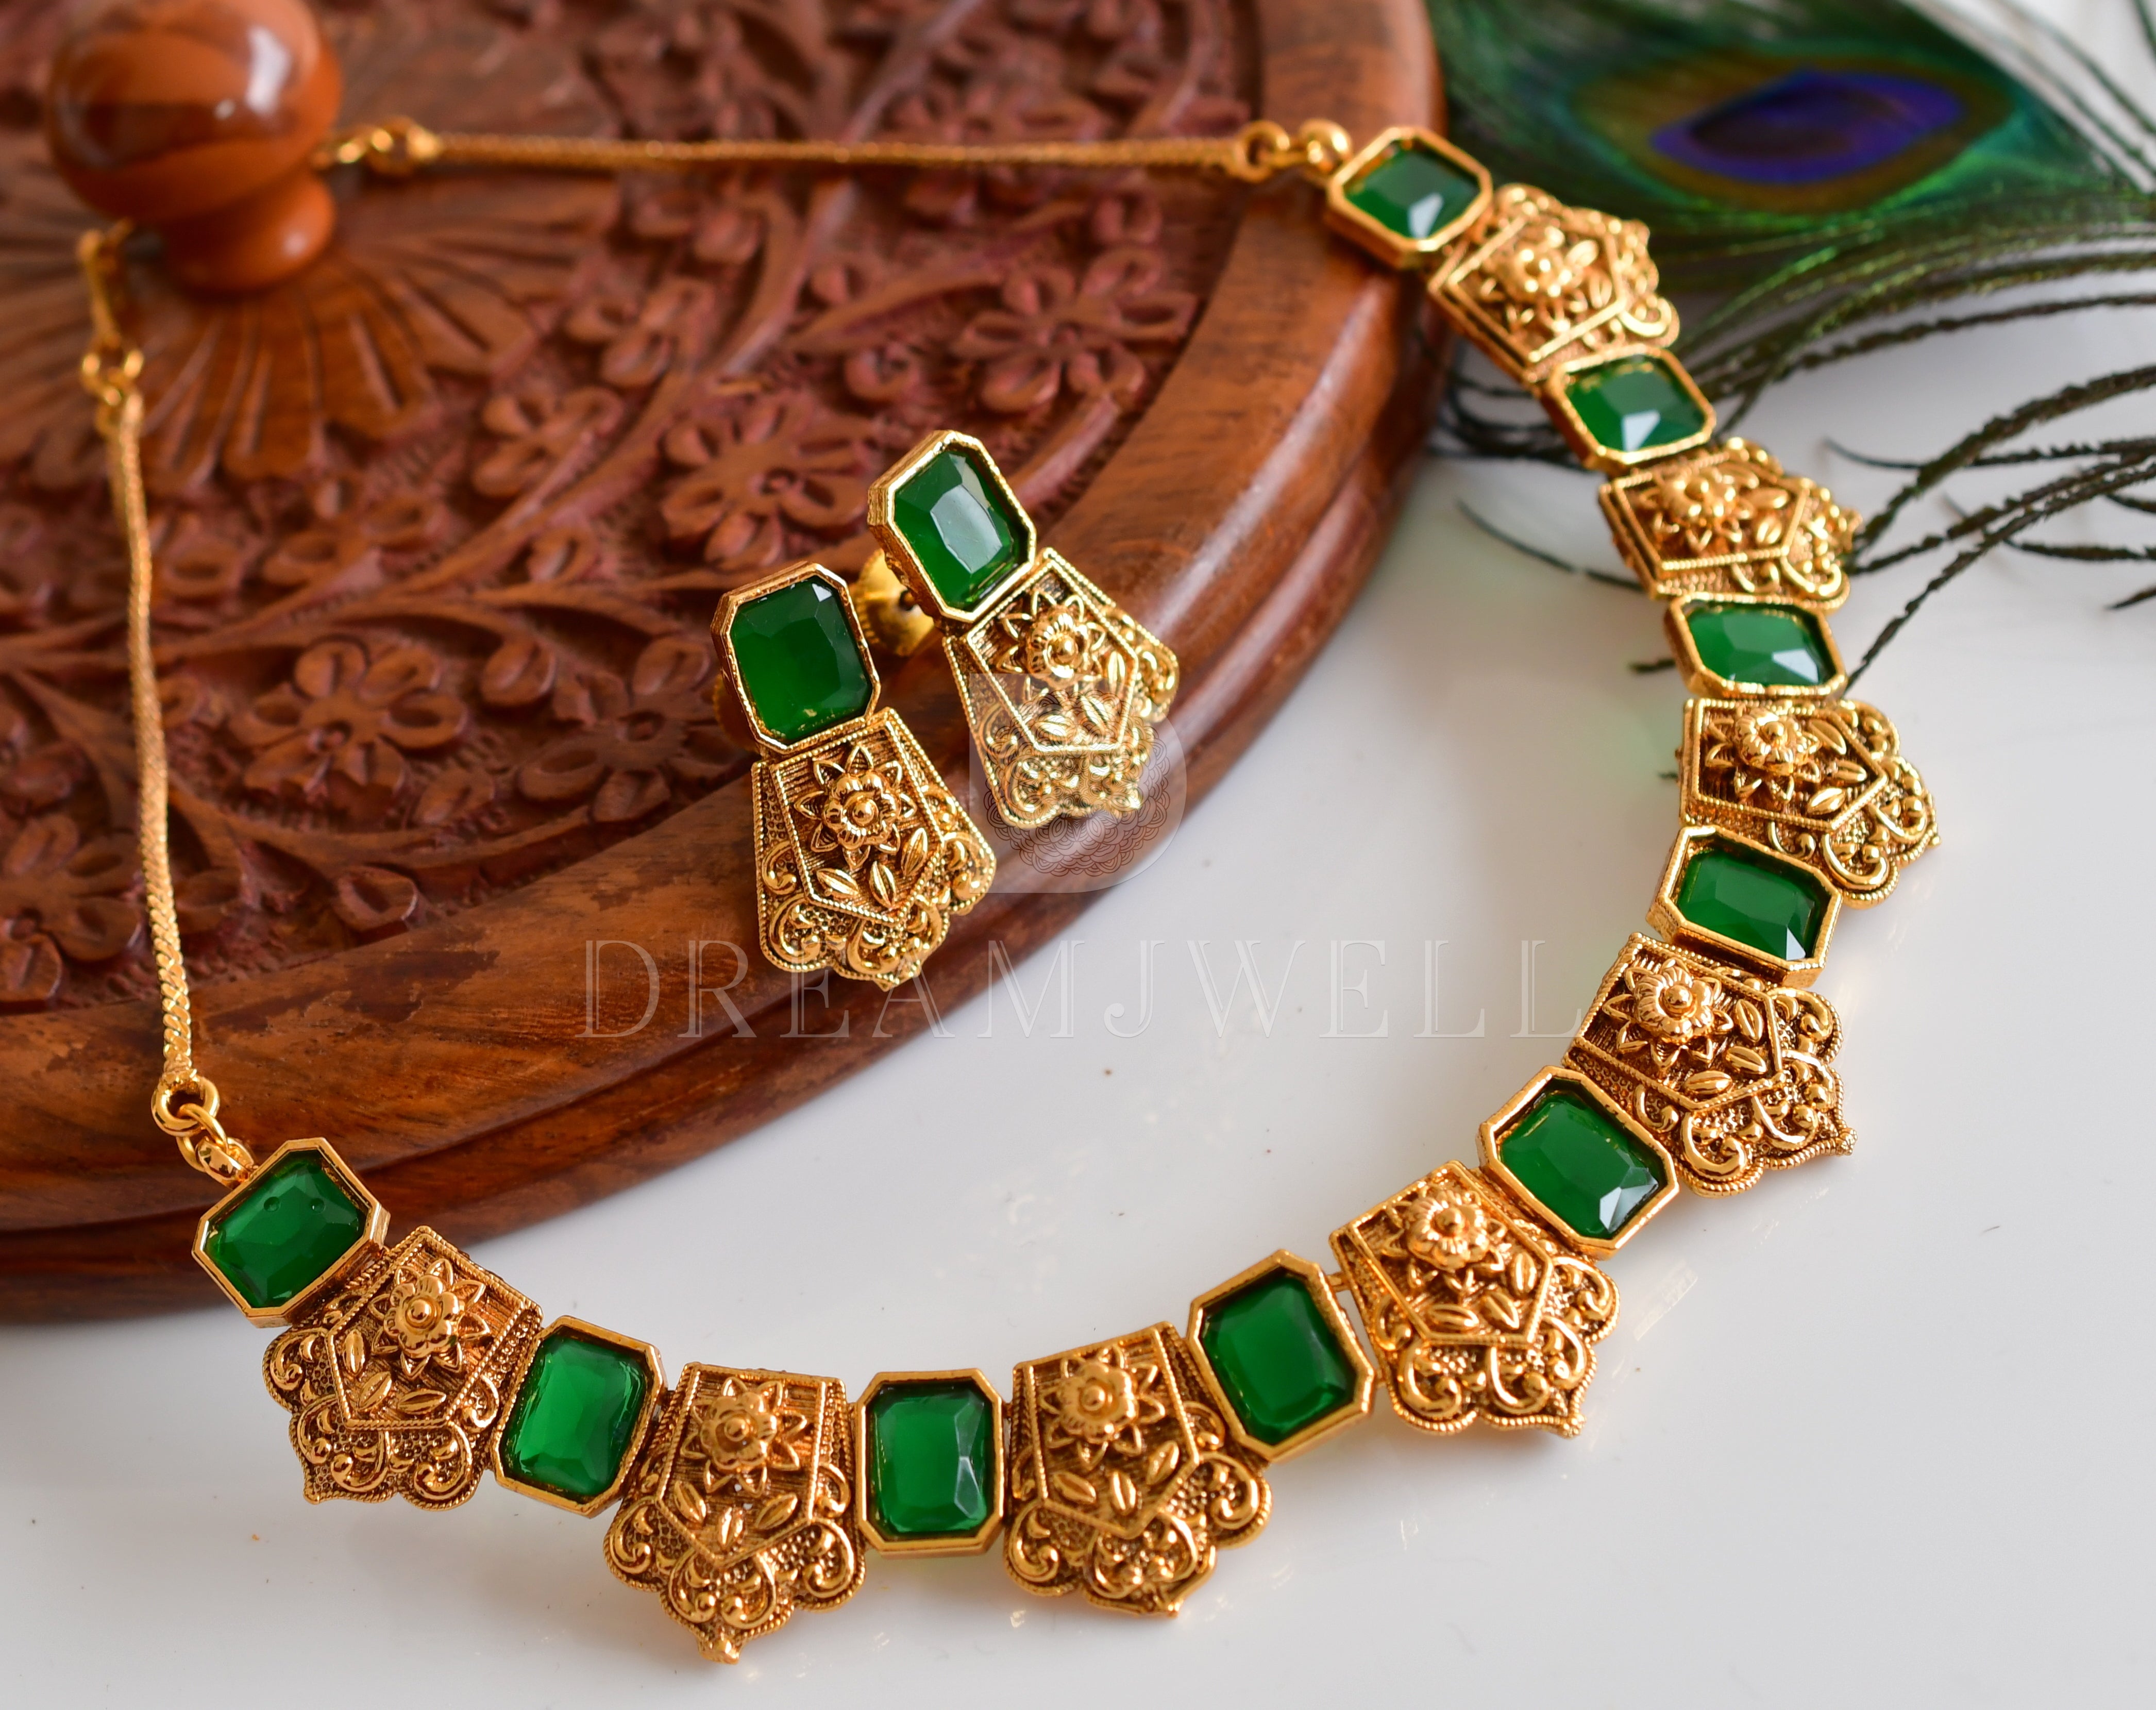 Bezel Gemstone Round Pendant Necklace - Gold Plated Chain - Green Amethyst  Quartz(16-24